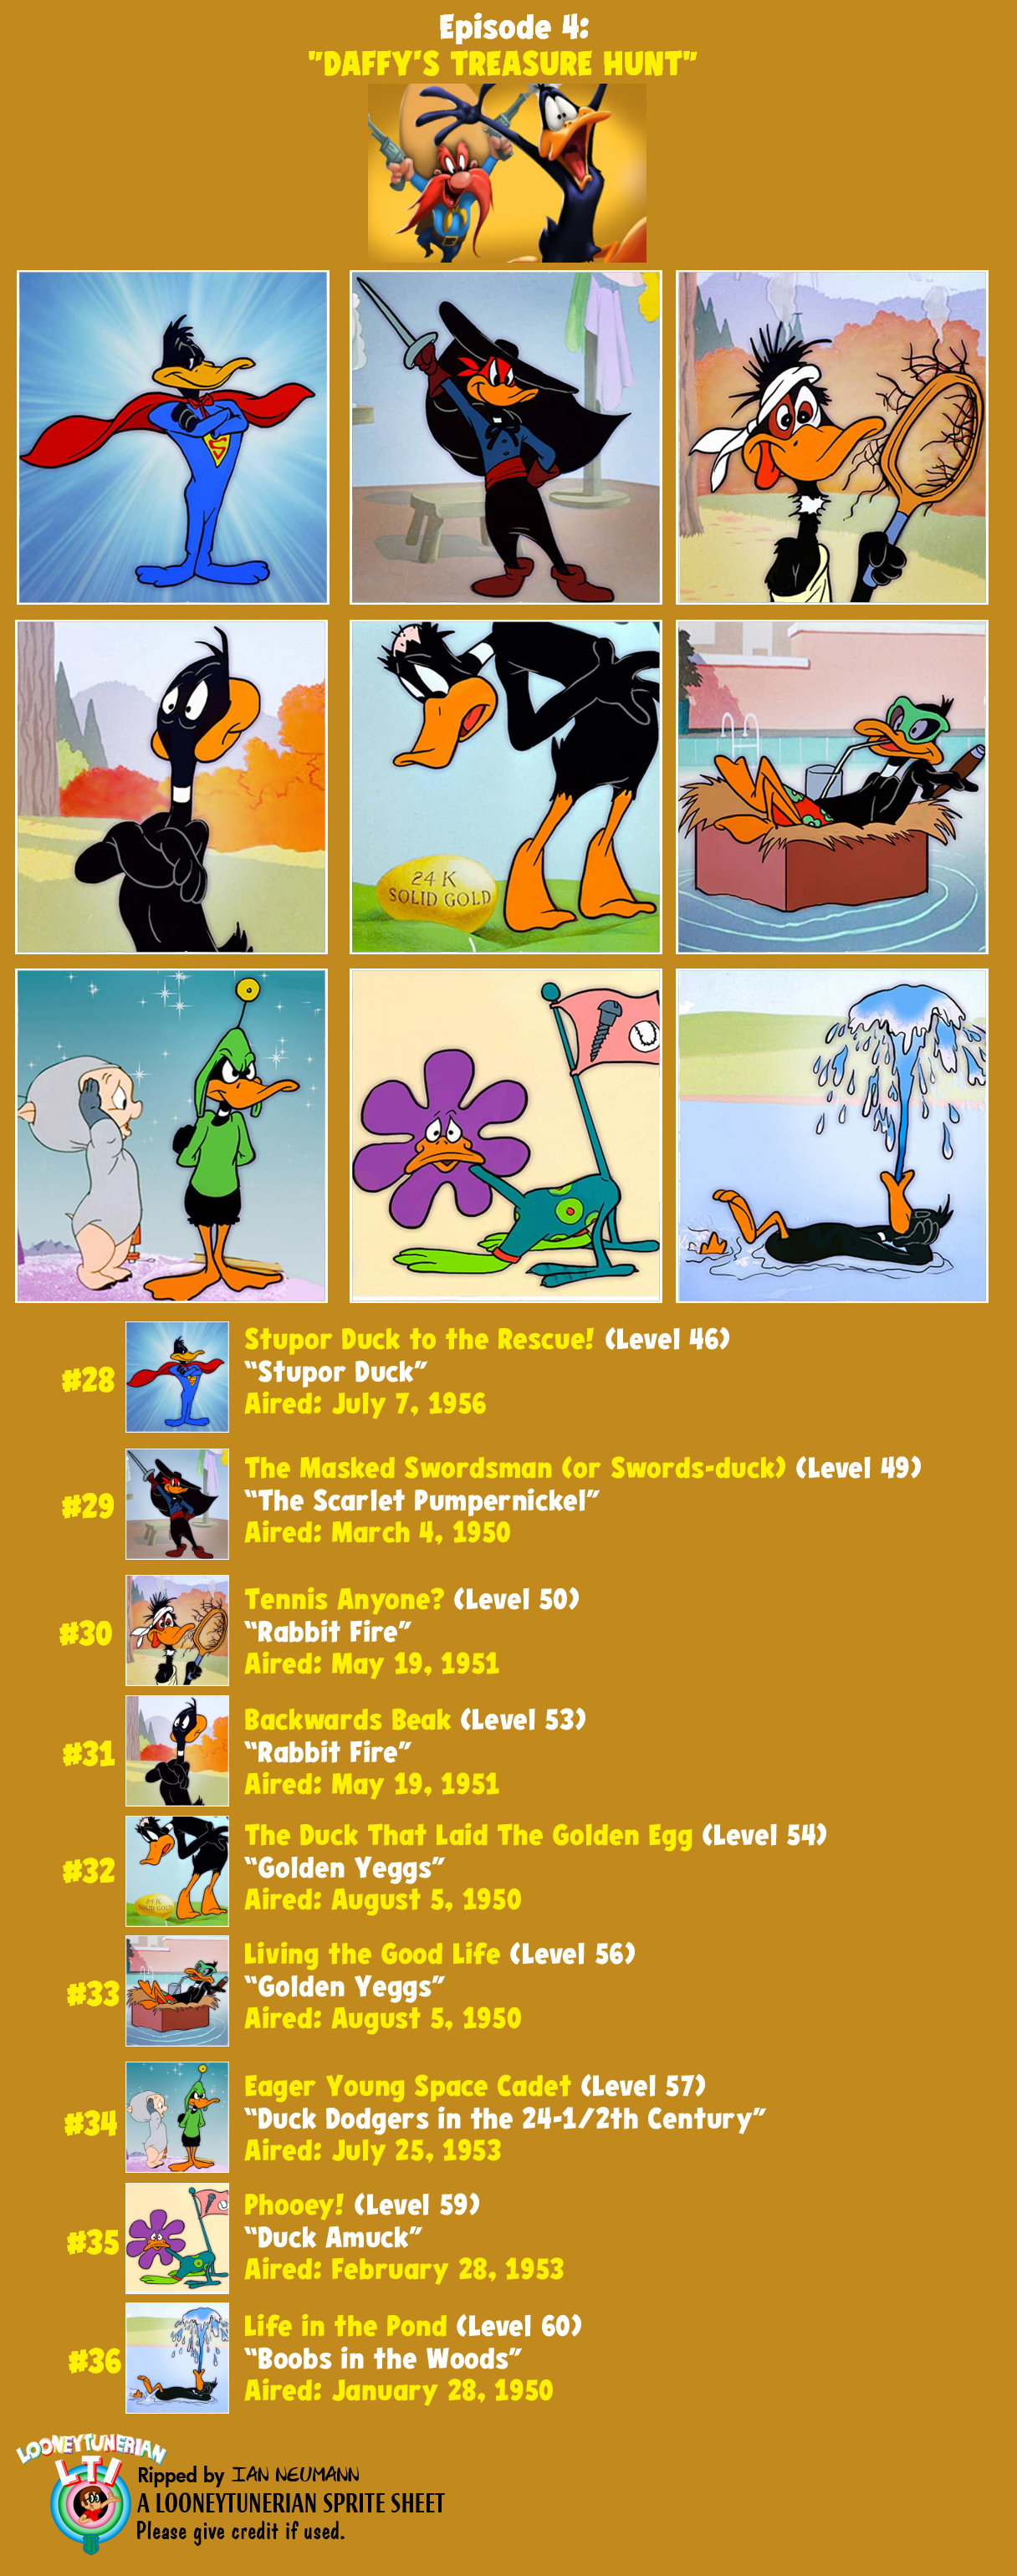 Episode 04: "Daffy's Treasure Hunt"